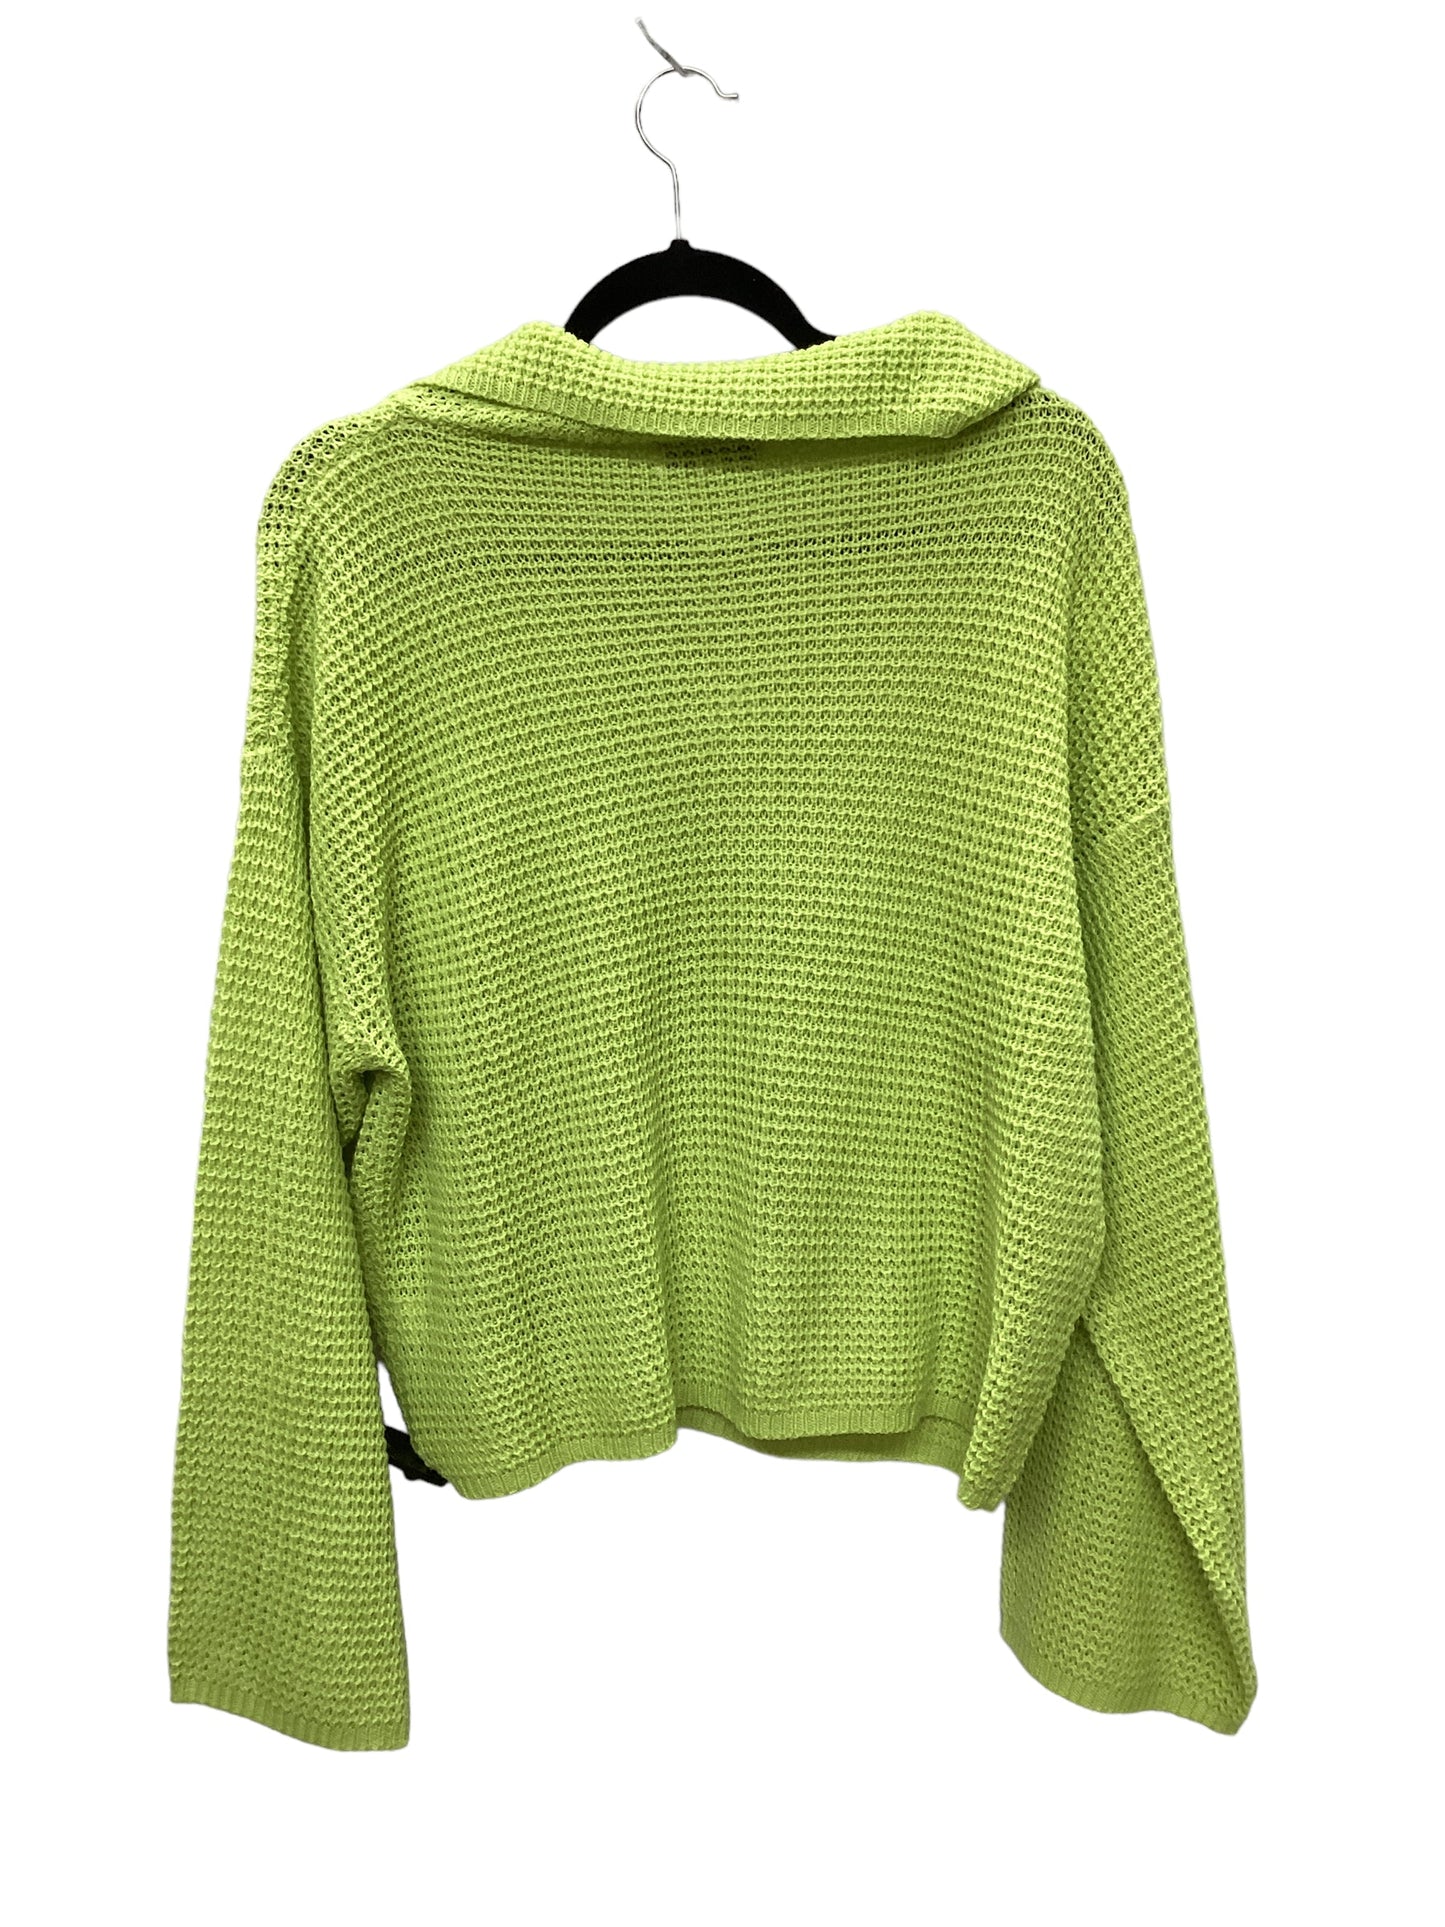 Sweater By She + Sky  Size: L